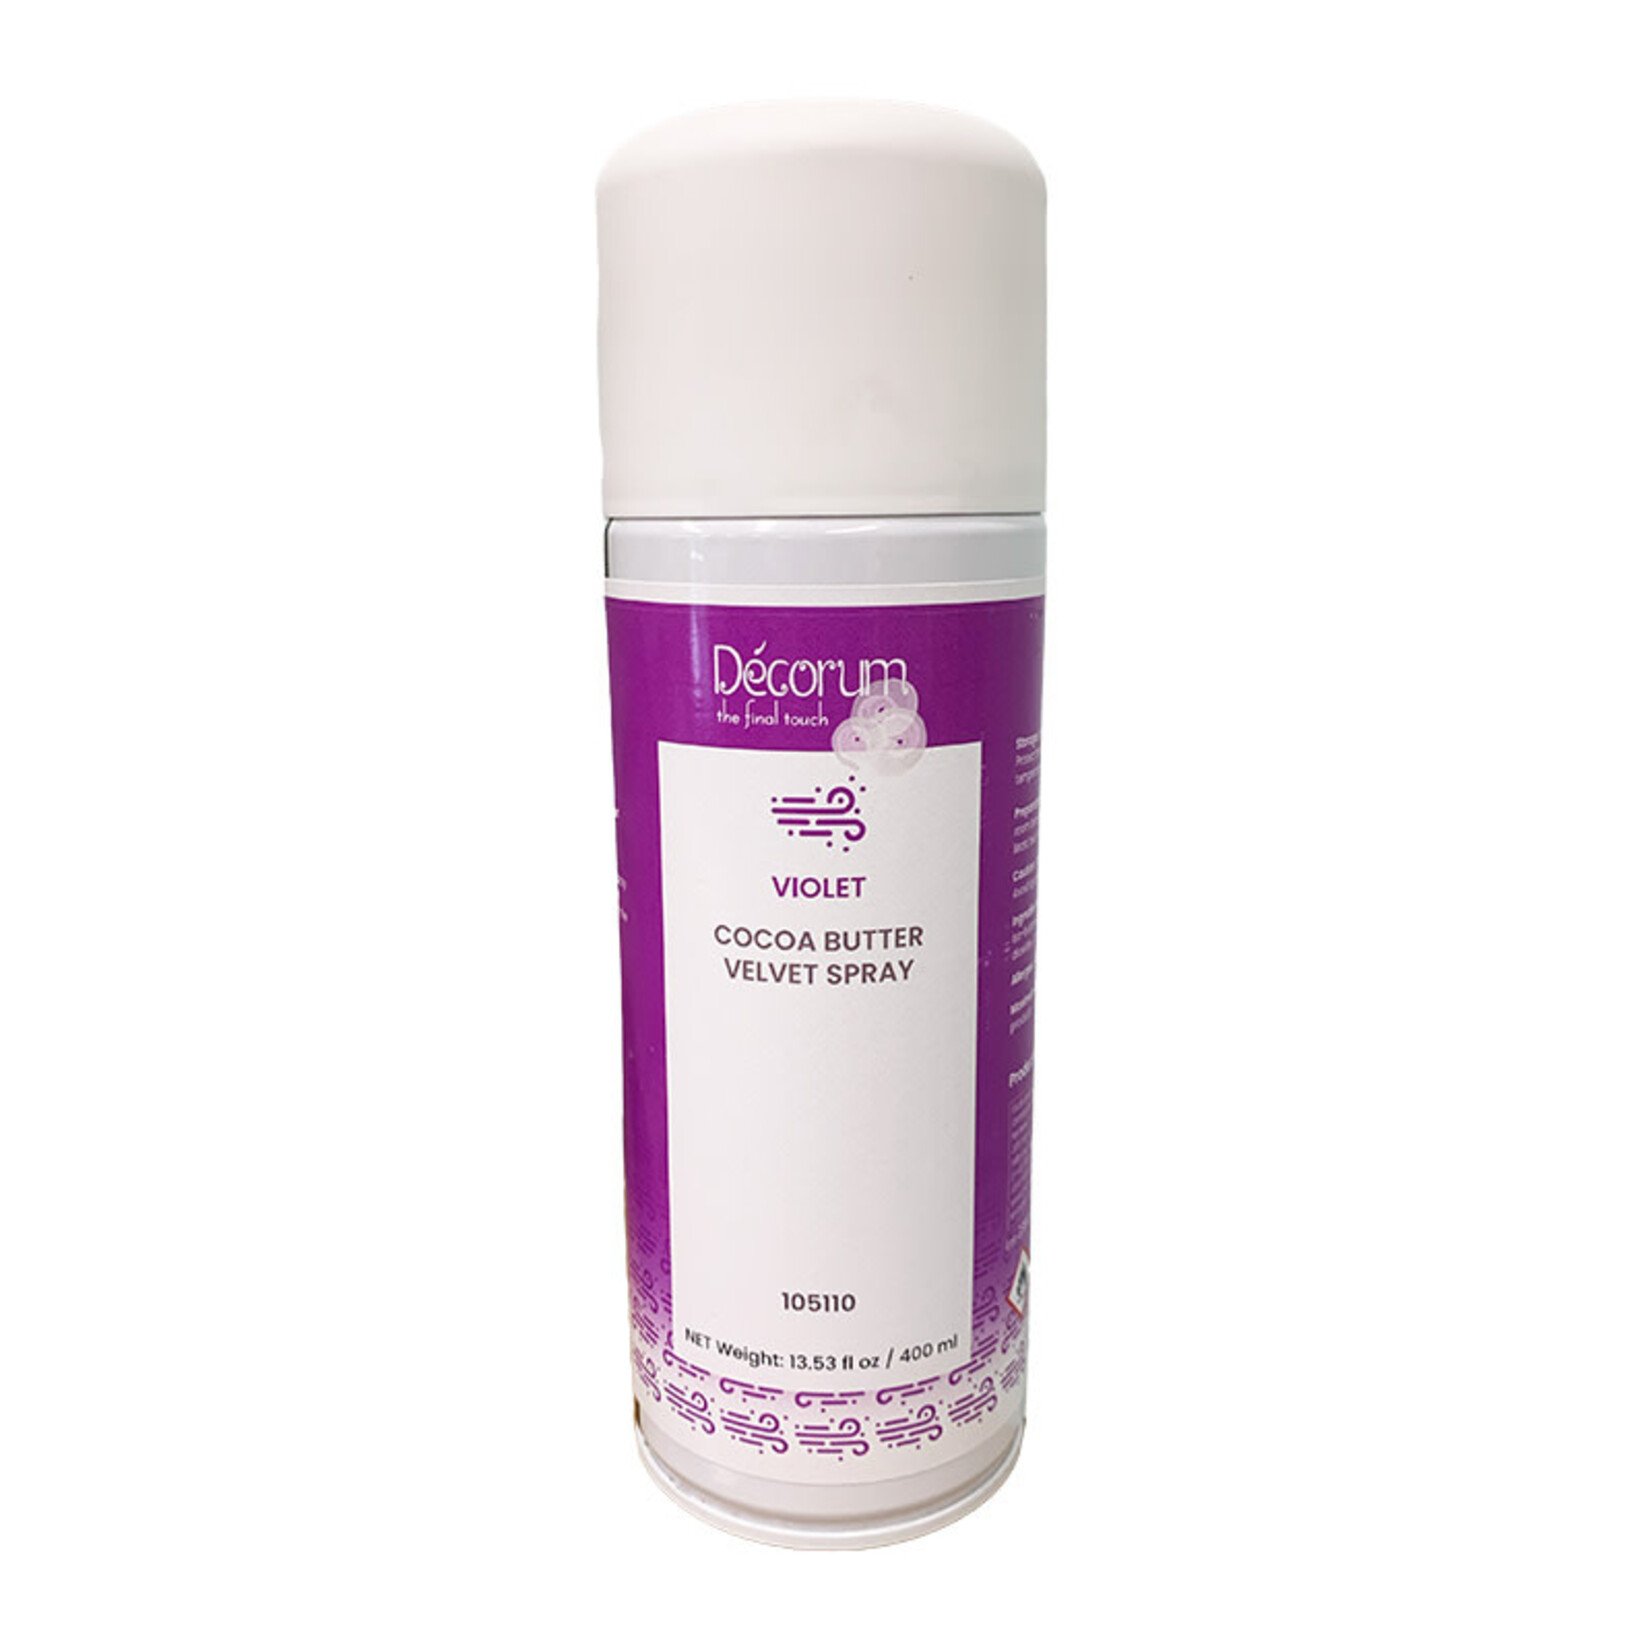 Decorum Decorum - Violet Cocoa Butter Velvet Spray - 13.5 oz